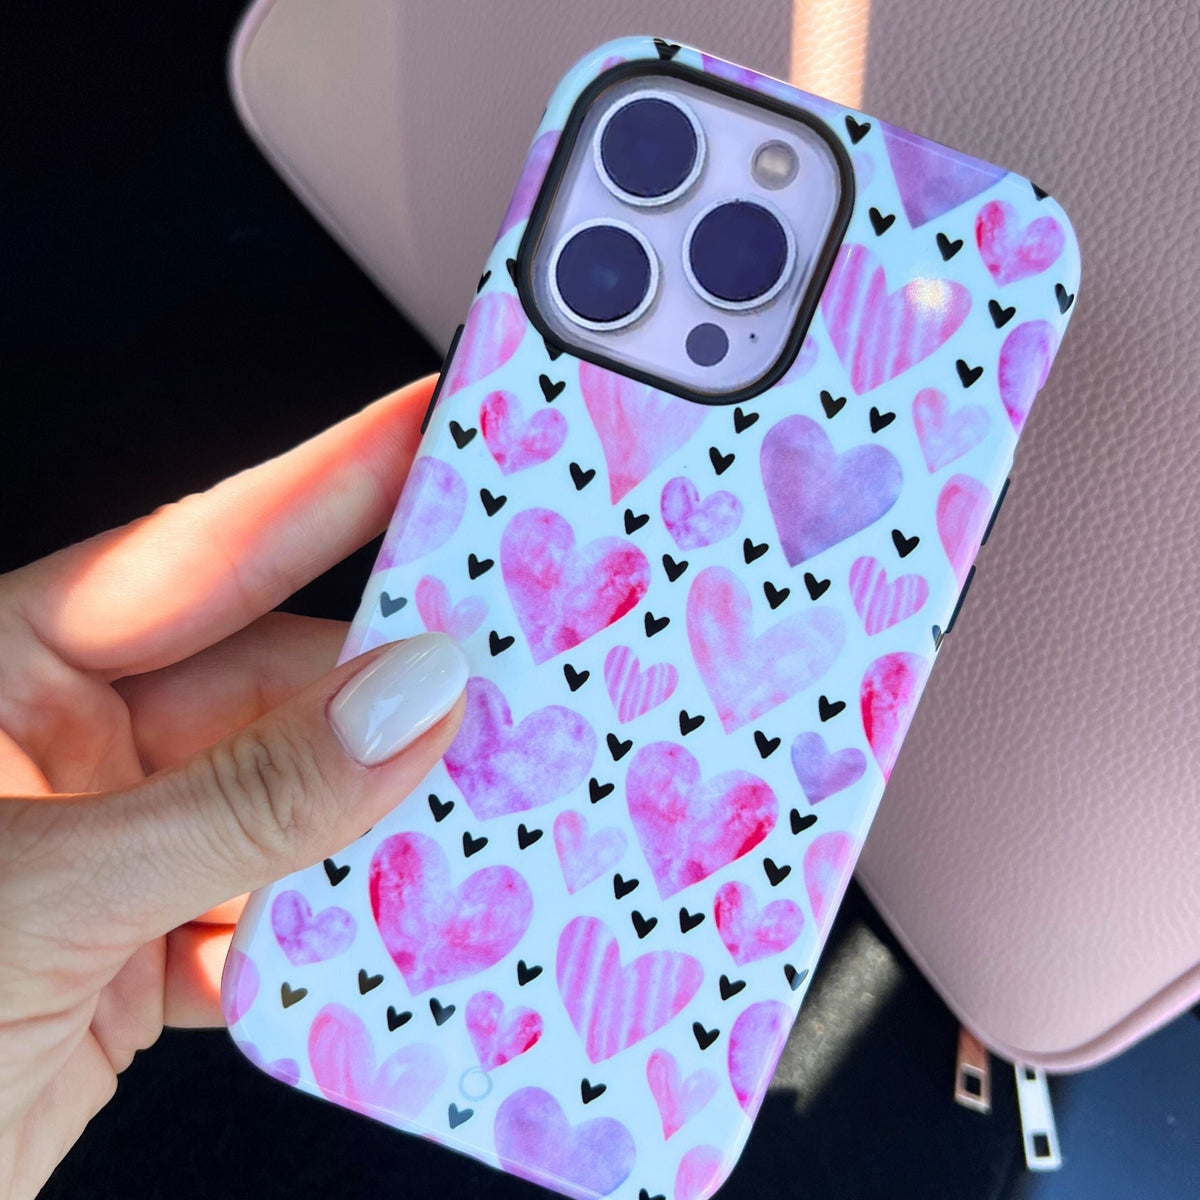 Blushing Hearts iPhone Case - iPhone 11 Pro